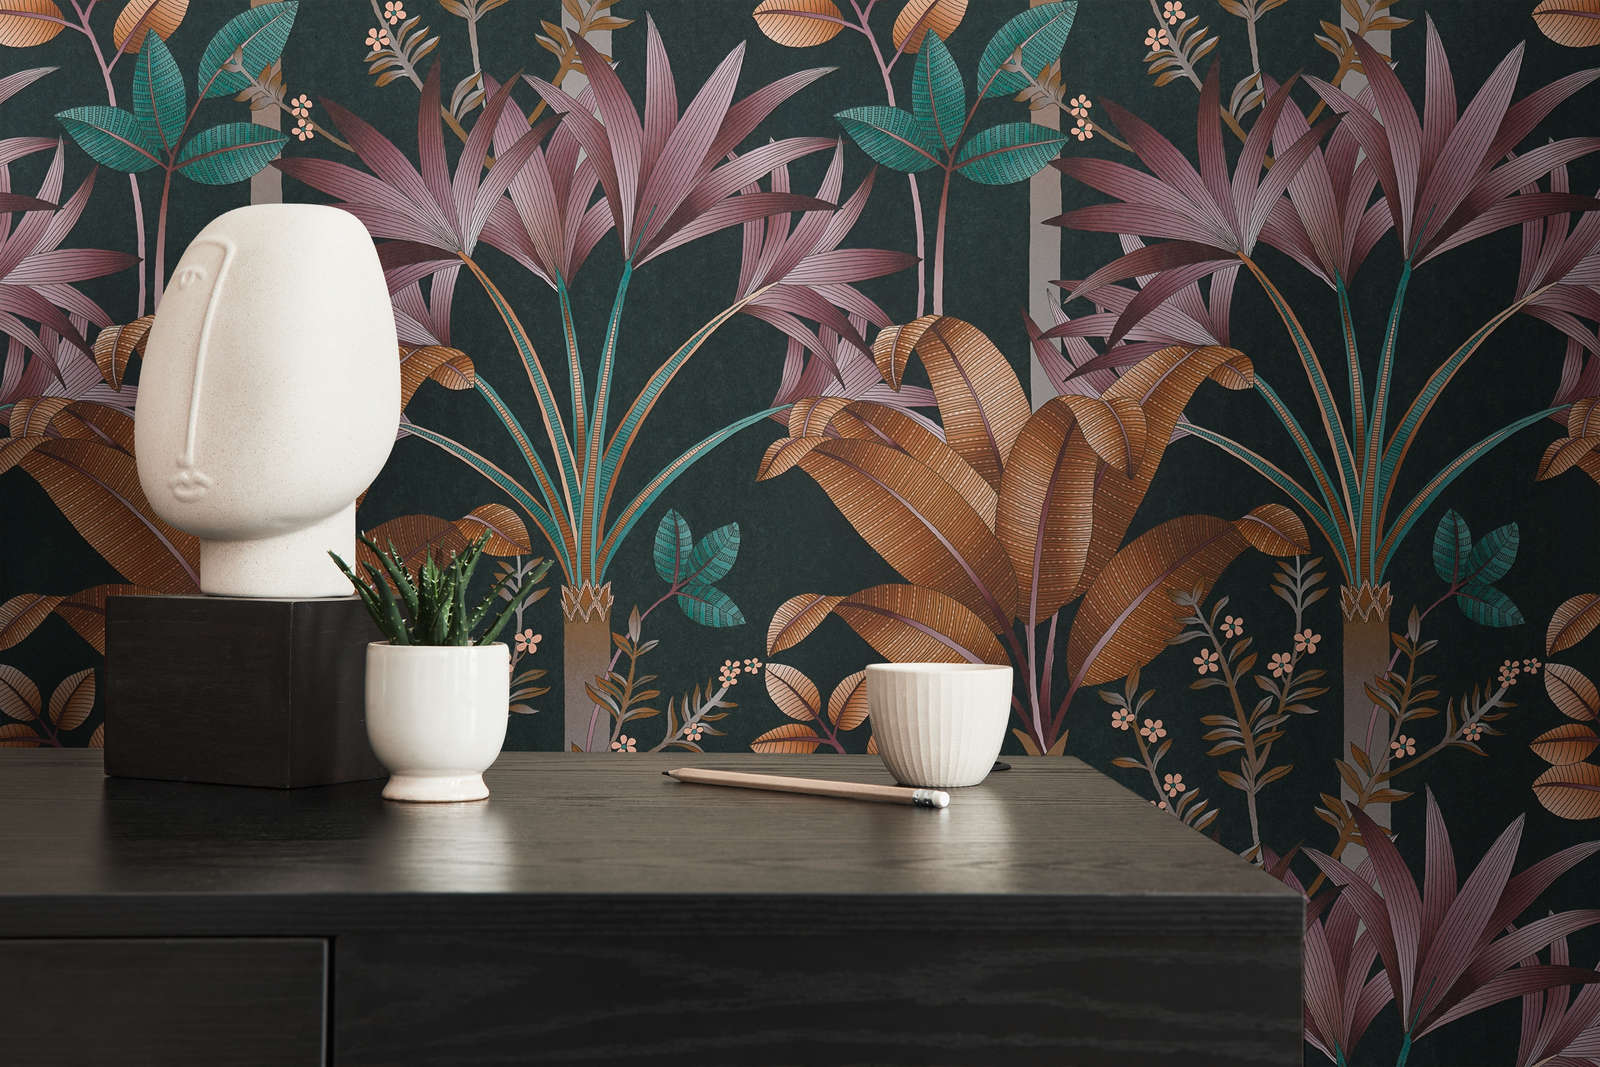             Floral non-woven wallpaper with leaf pattern - multicoloured, black, orange
        